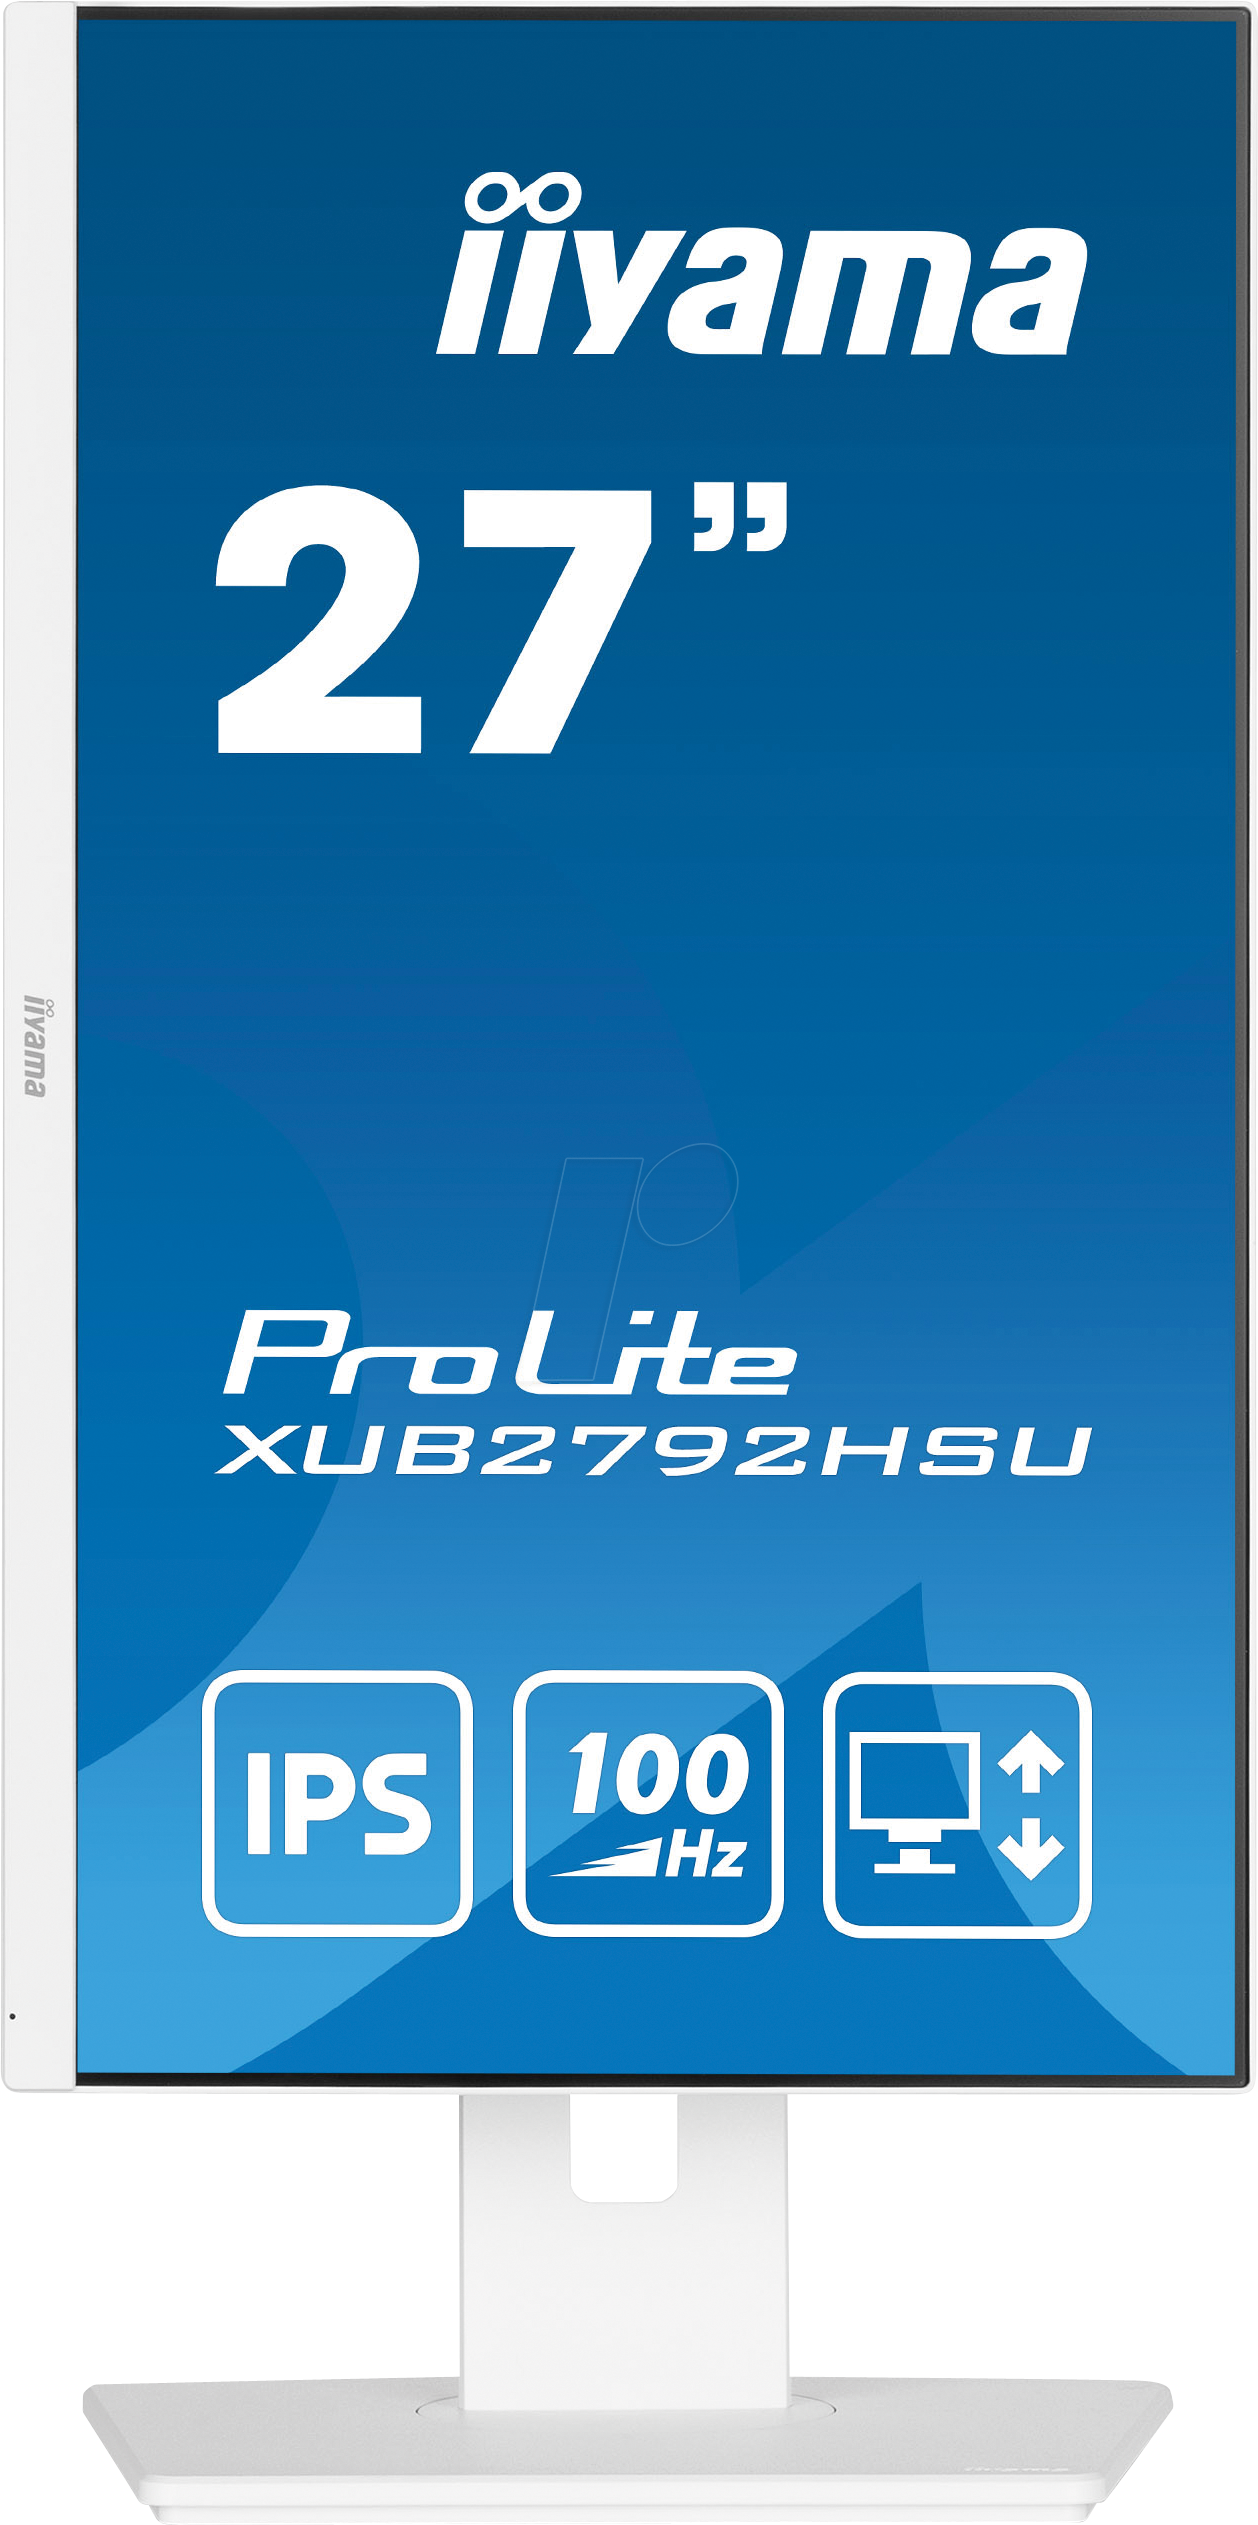 IIY XUB2792HSUW6 - 69cm Monitor, 1080p, USB, Pivot, weiß von Iiyama